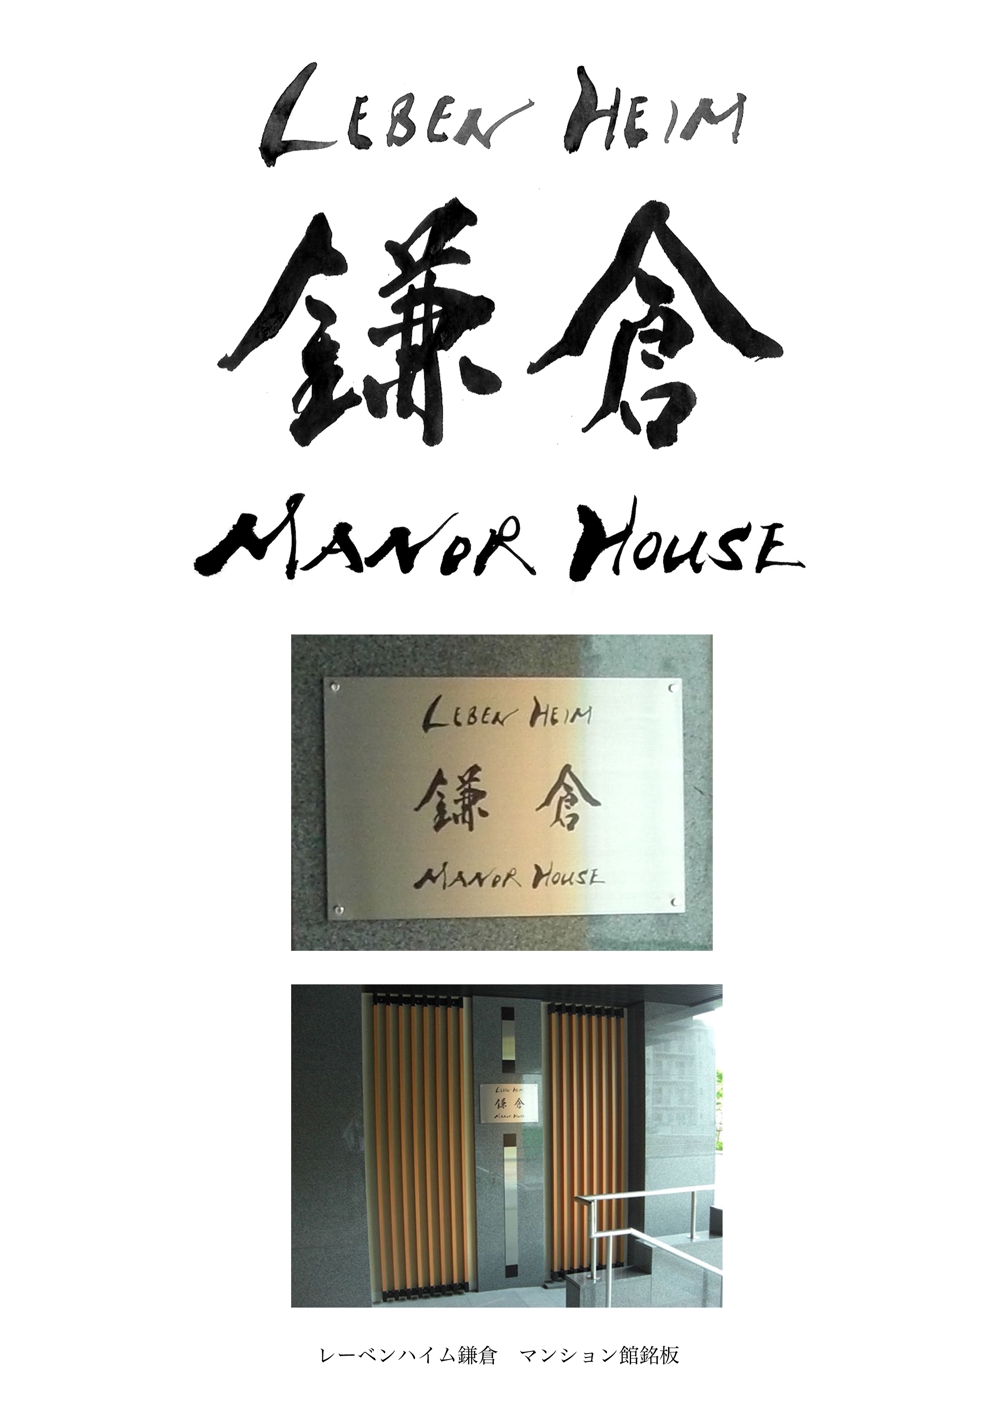 『LEBEN HEIM 鎌倉 MANOR HOUSE』マンション館銘板ロゴ作成